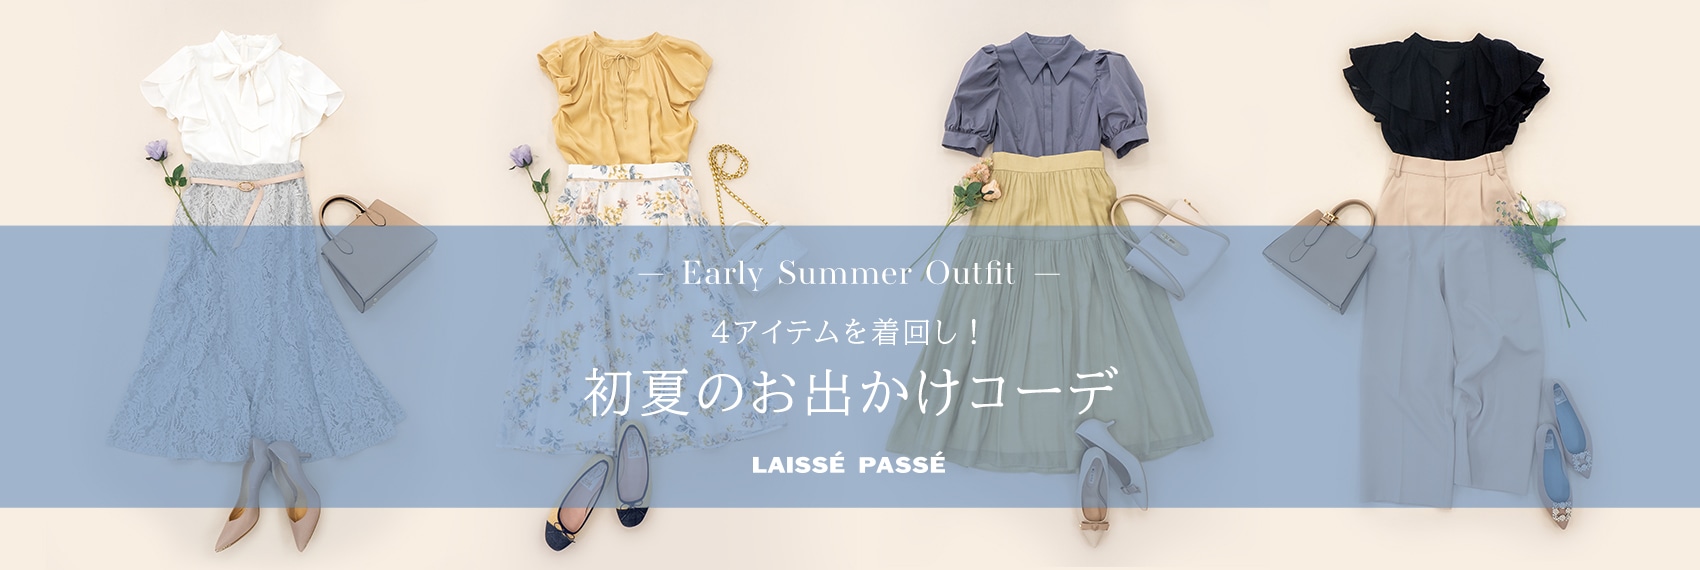 Early Summer Outfit 4アイテムを着回し！初夏のお出かけコーデ LAISSE PASSE